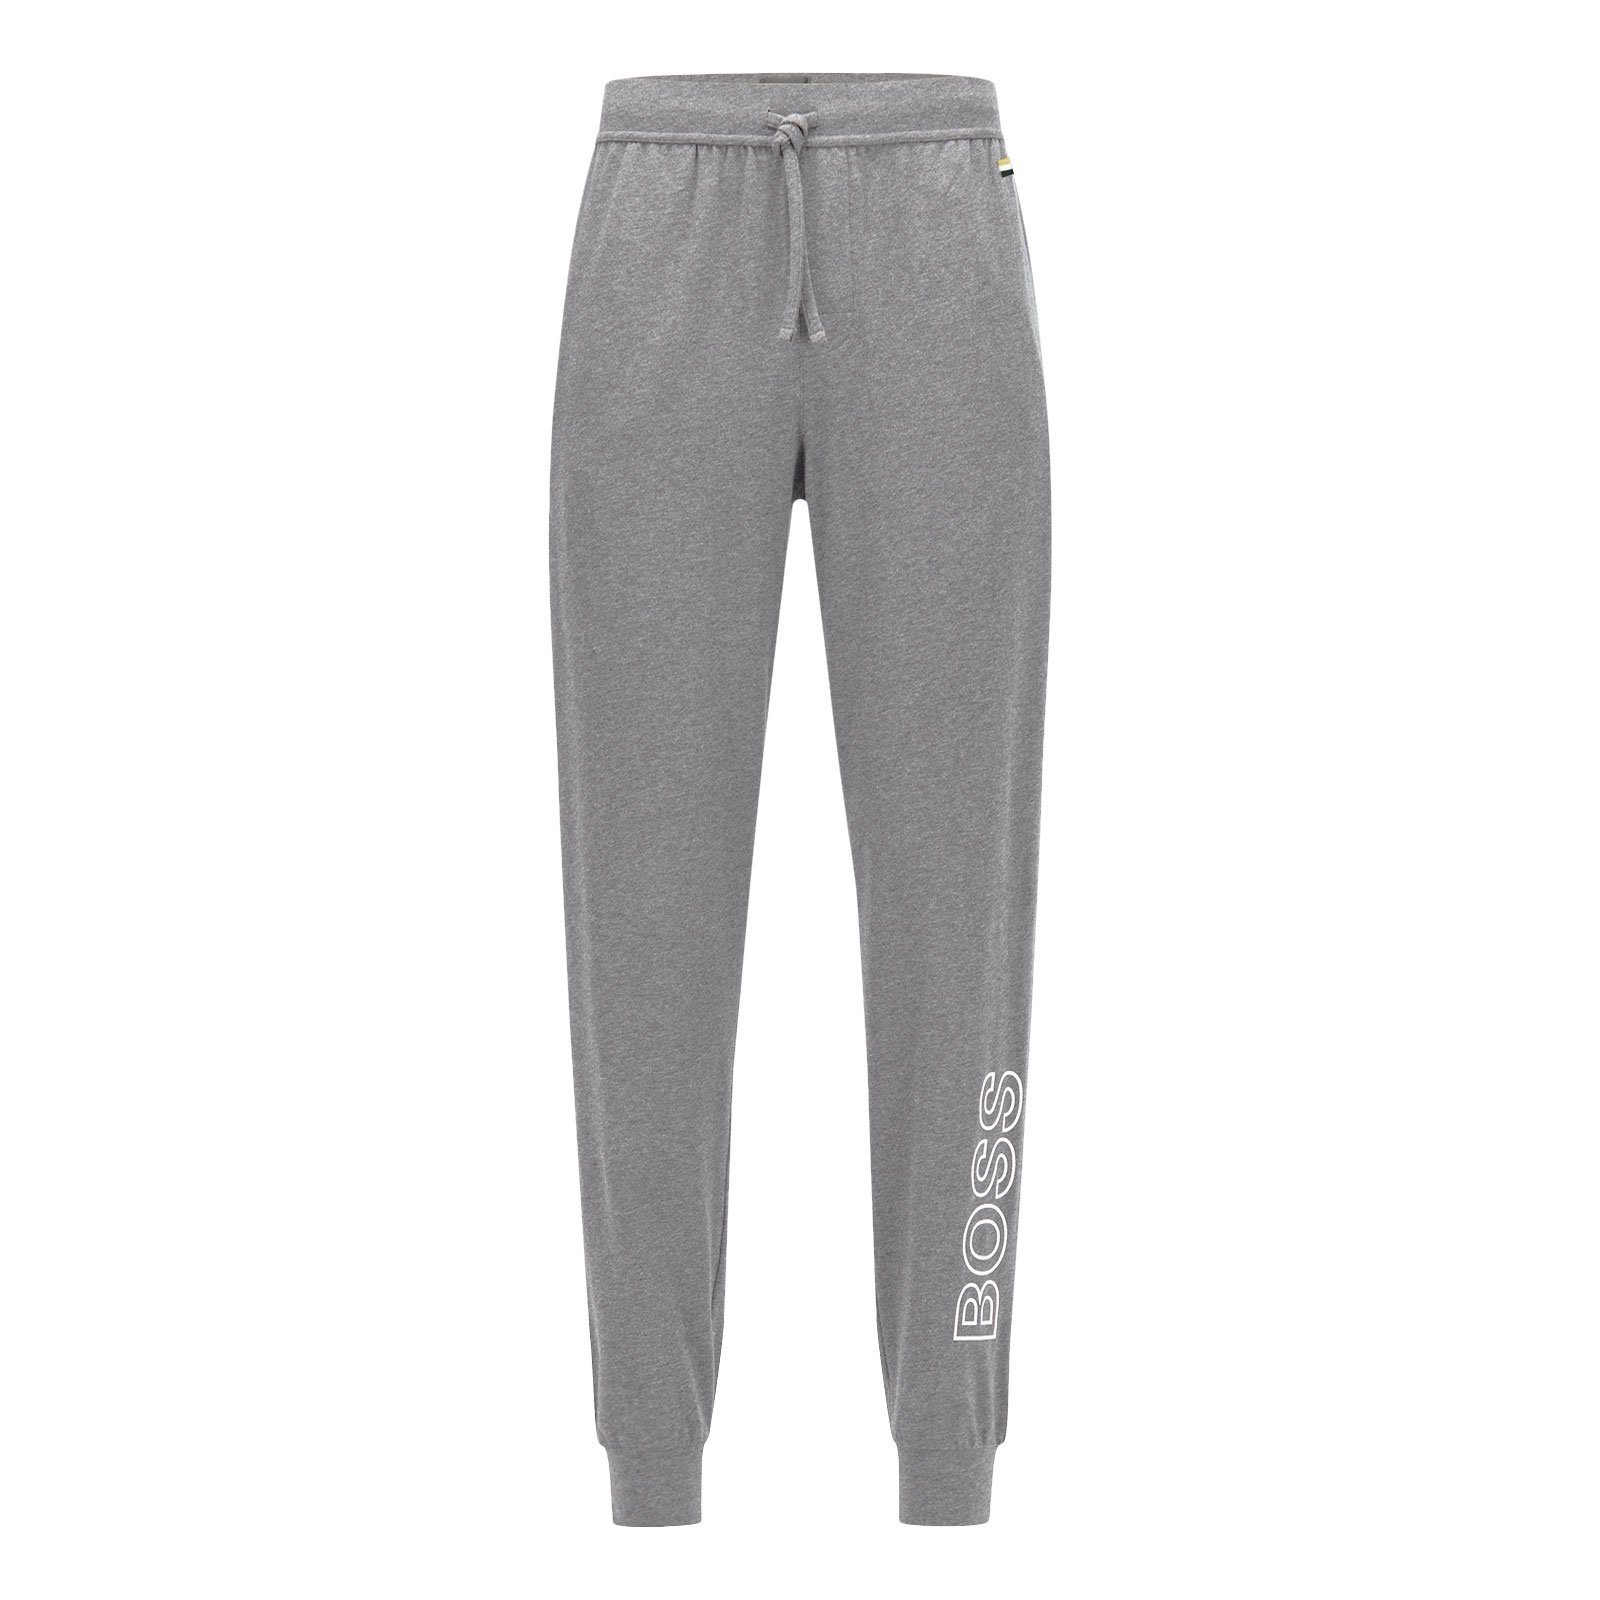 033 mit BOSS Identity Outline-Logo grey Jogginghose Pants medium